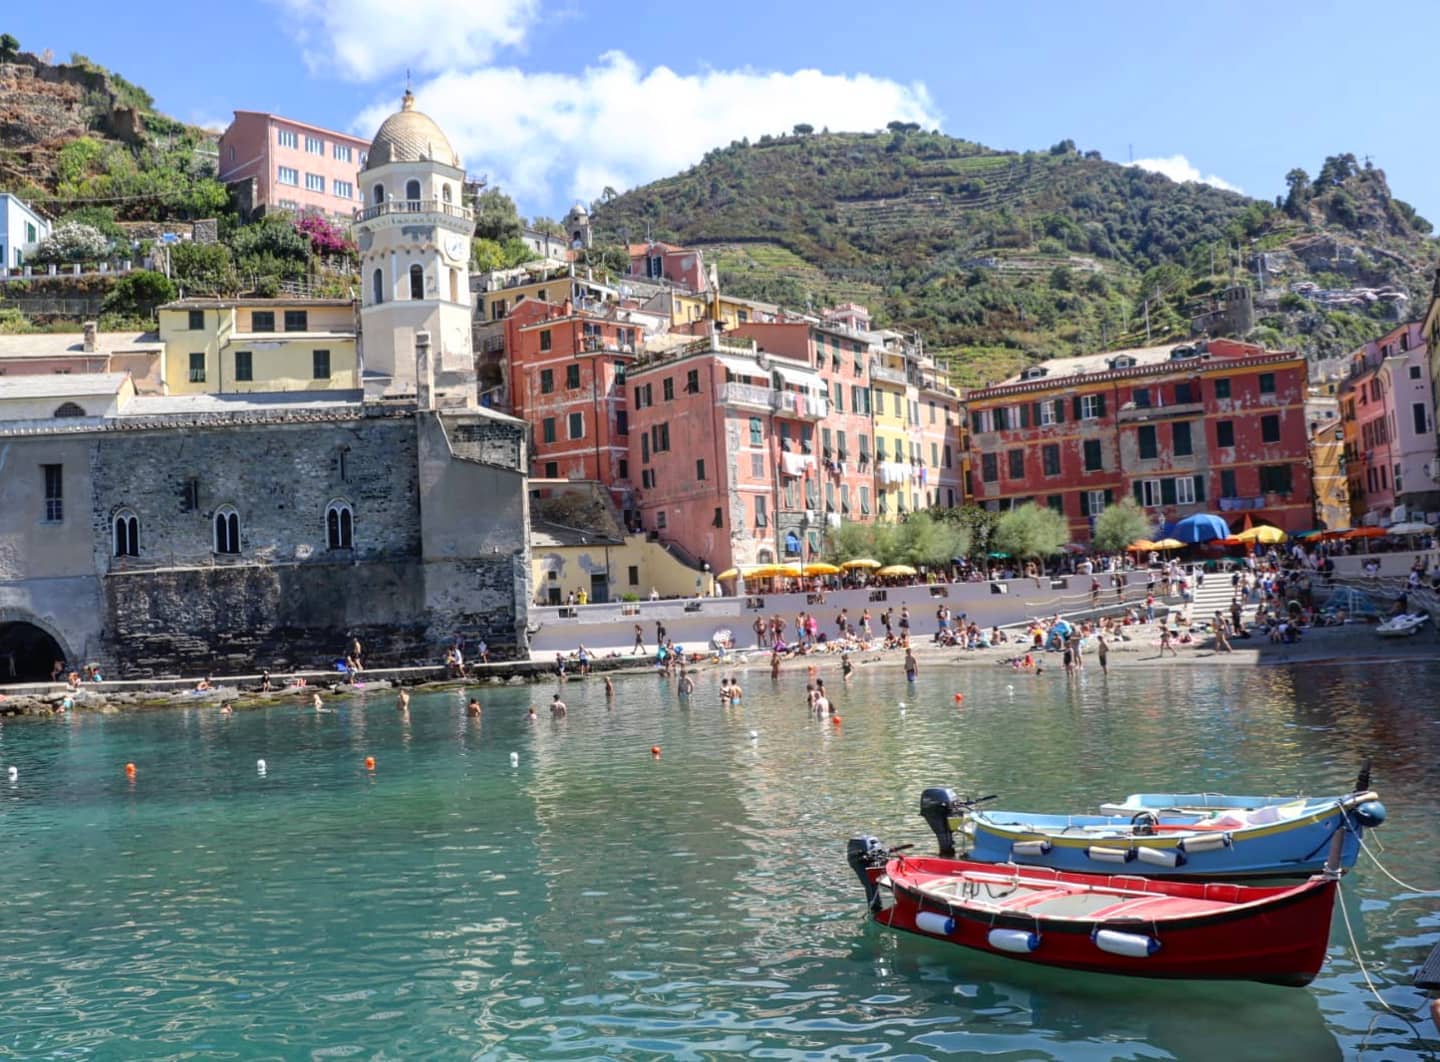 Vernazza, Cinque Terre, Liguria, Italy
.
#vernazza #cinqueterre #ig_liguria #igersliguria #yallersitalia #volgoitalia
.
Photo: @grtrsm